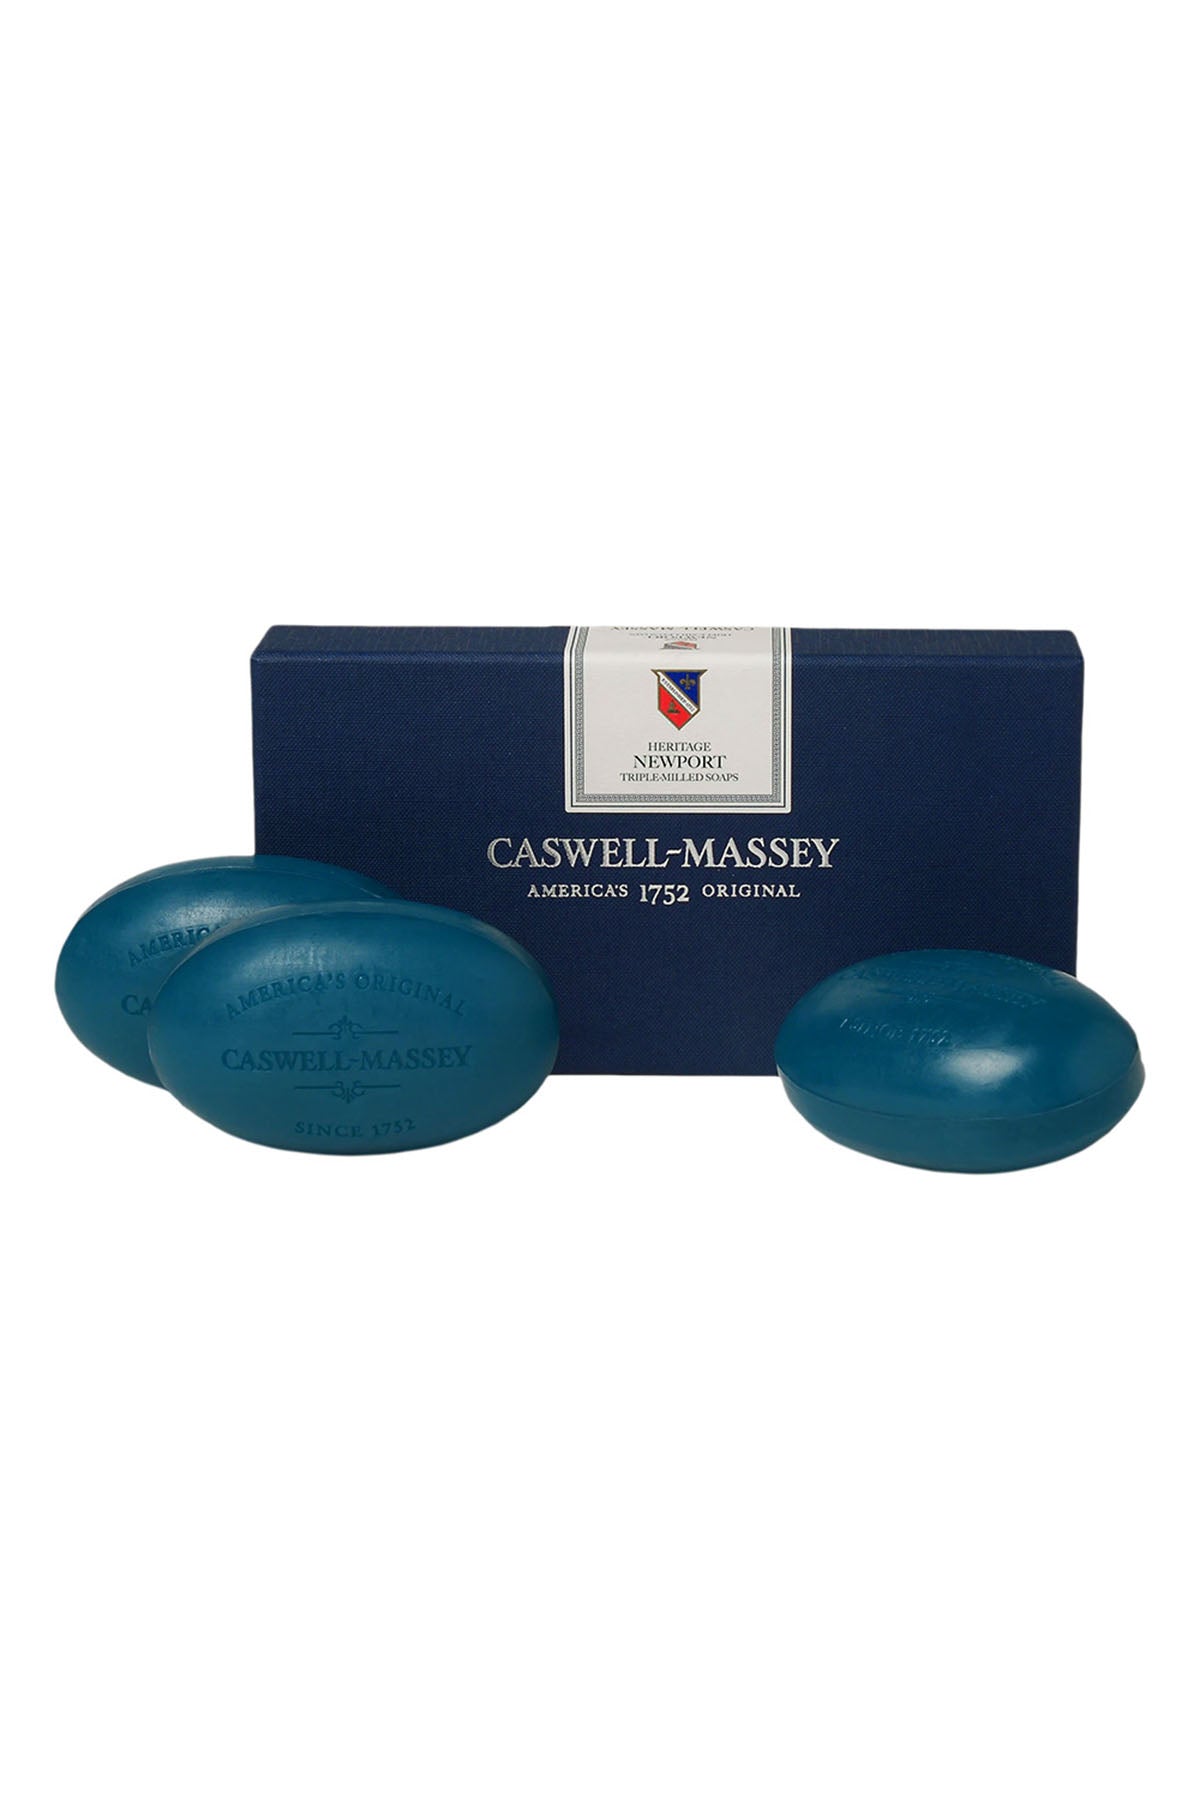 Caswell-Massey Heritage Newport 3 Bar Soap Set